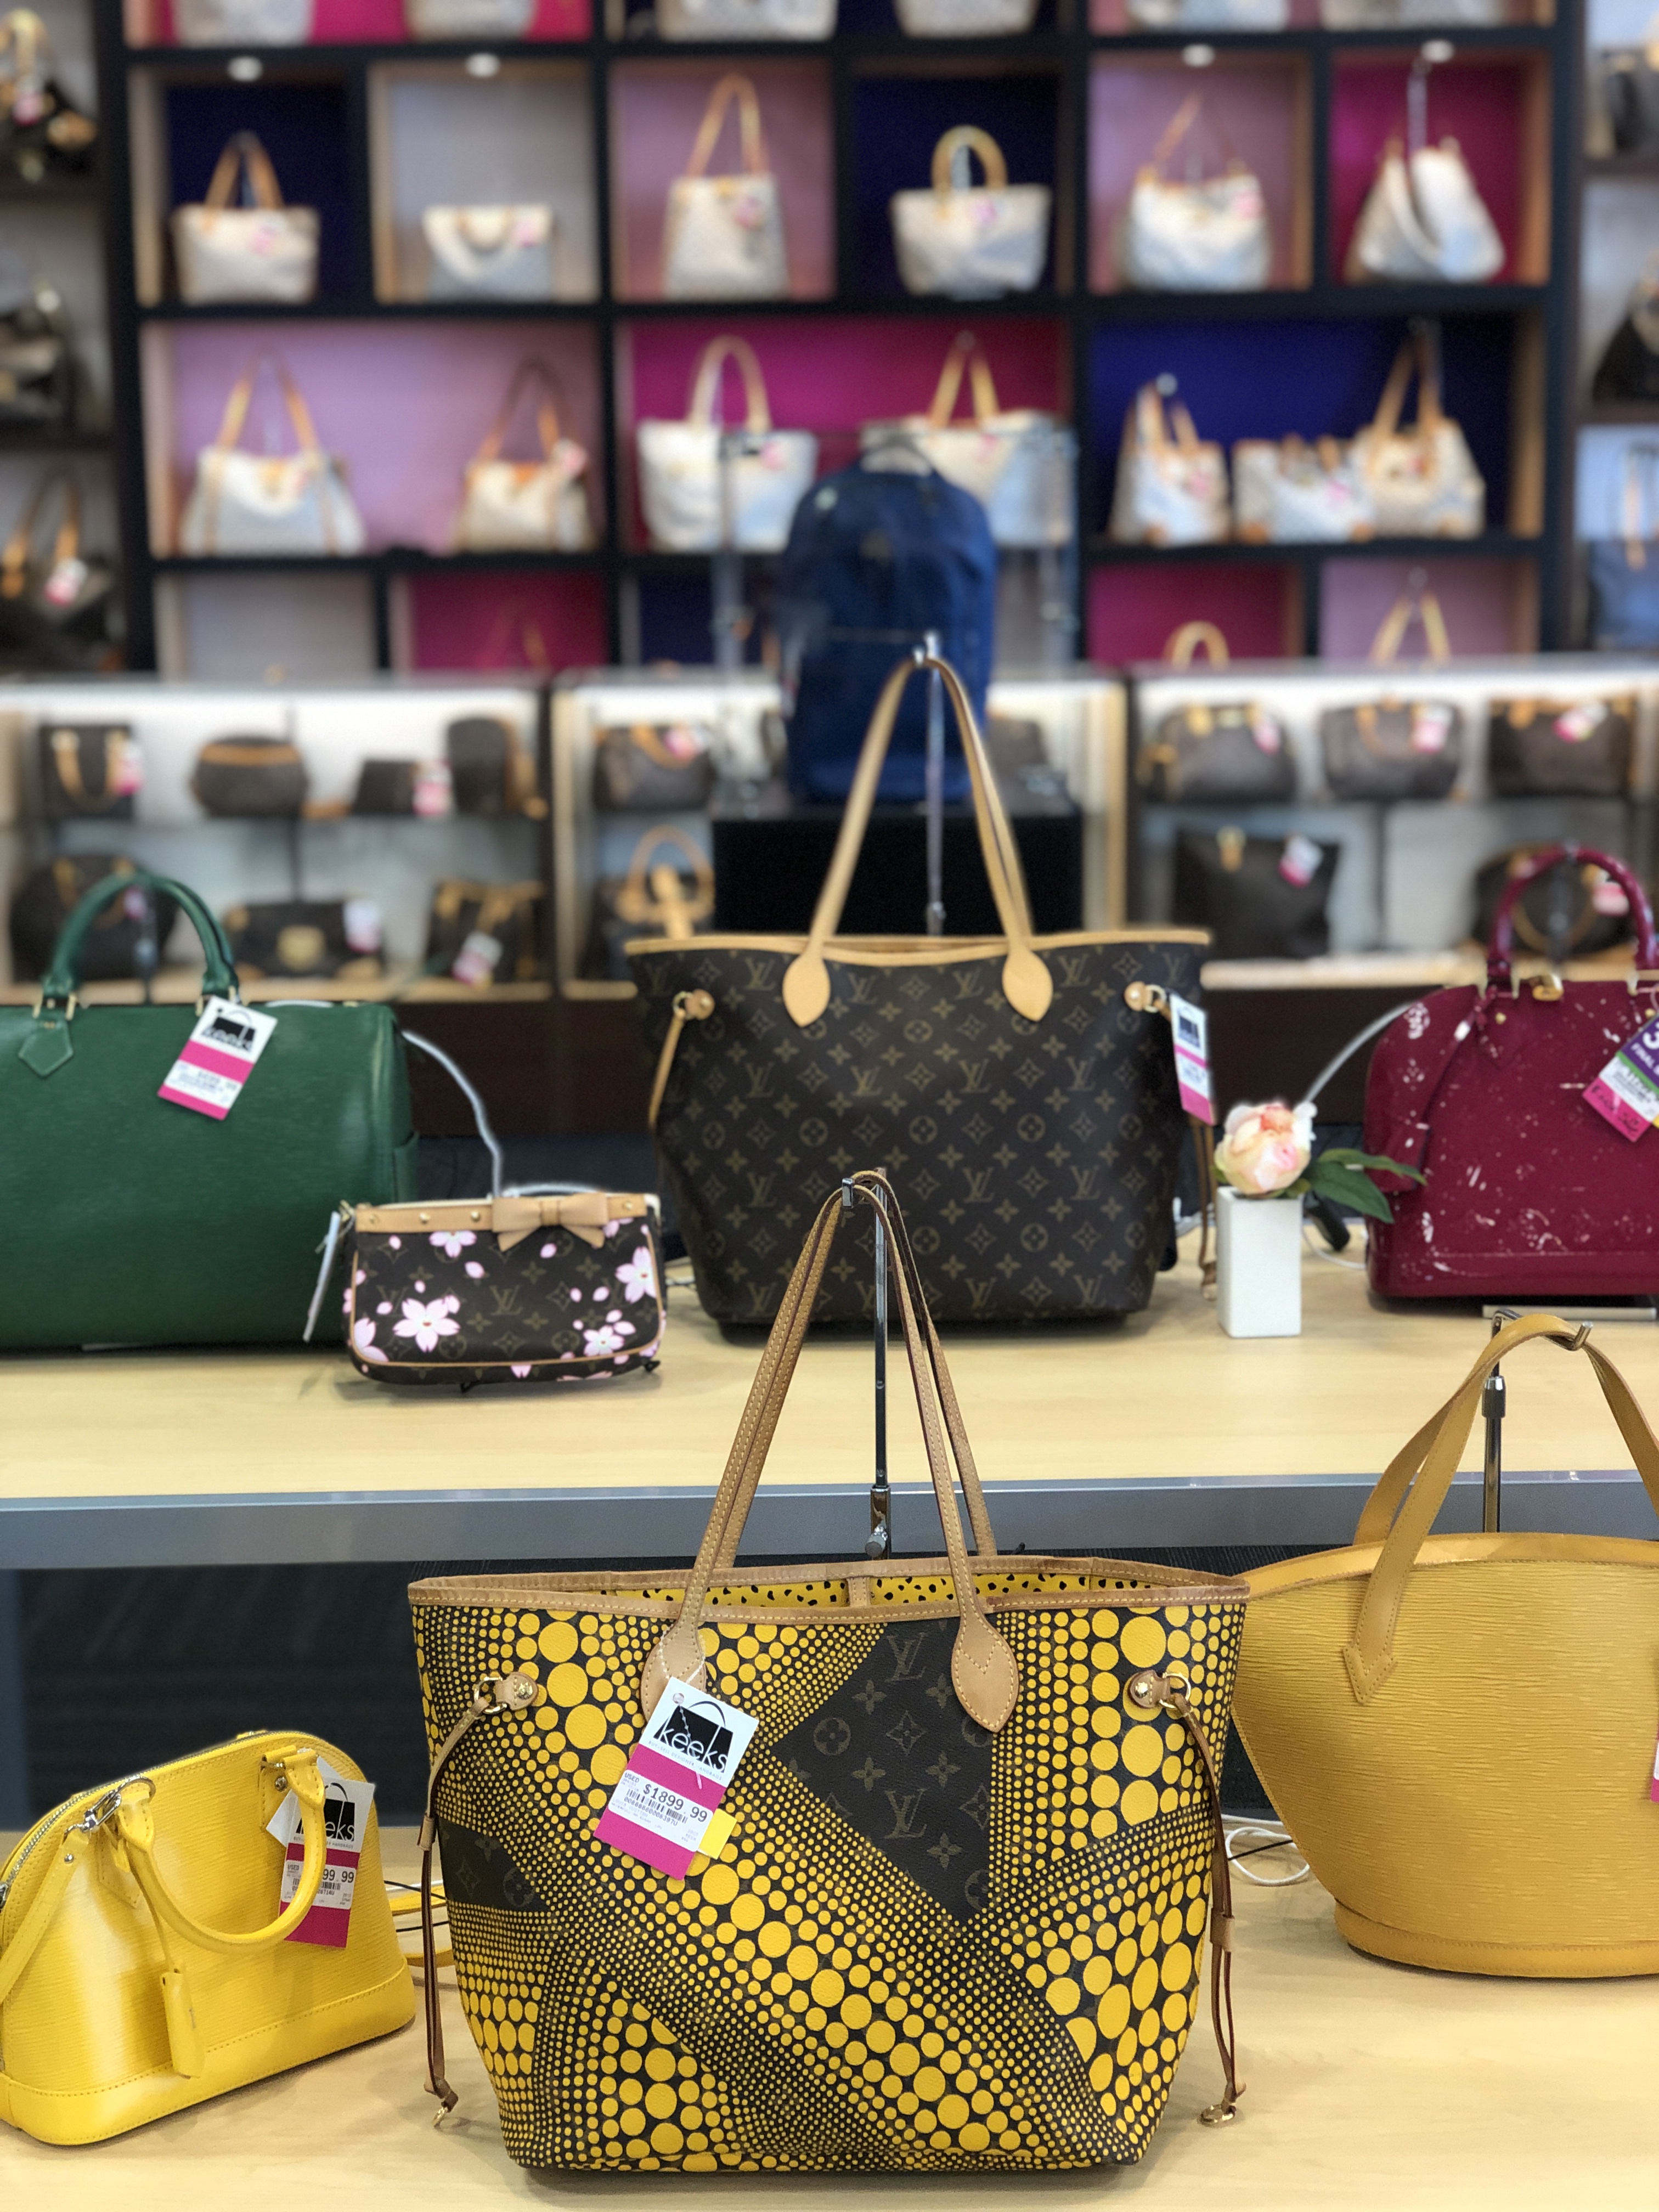 Keeks Buy + Sell Designer Handbags located in Plano, TX. Use code